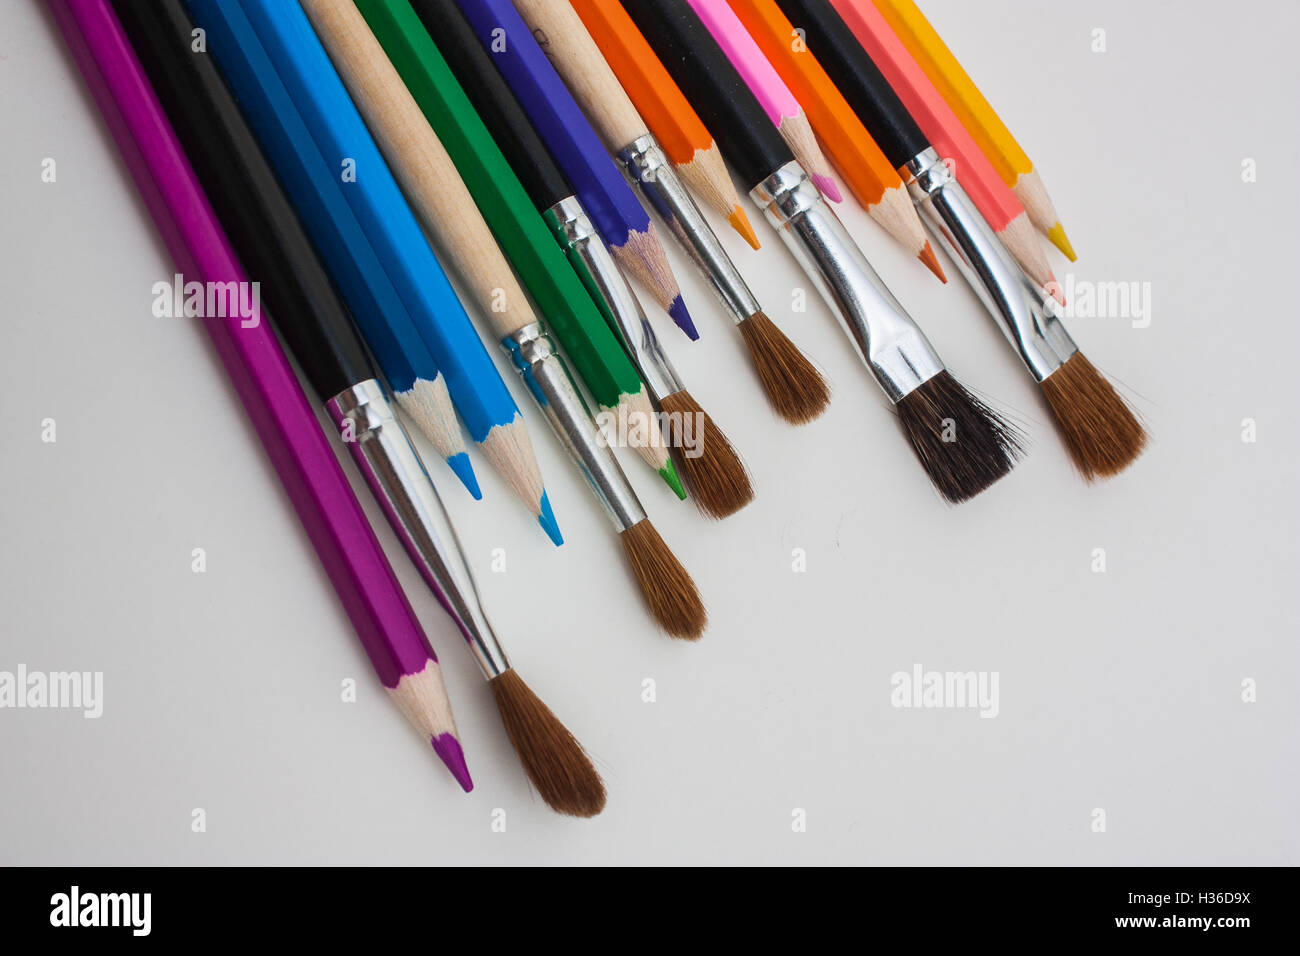 drawing tools Stock Photo